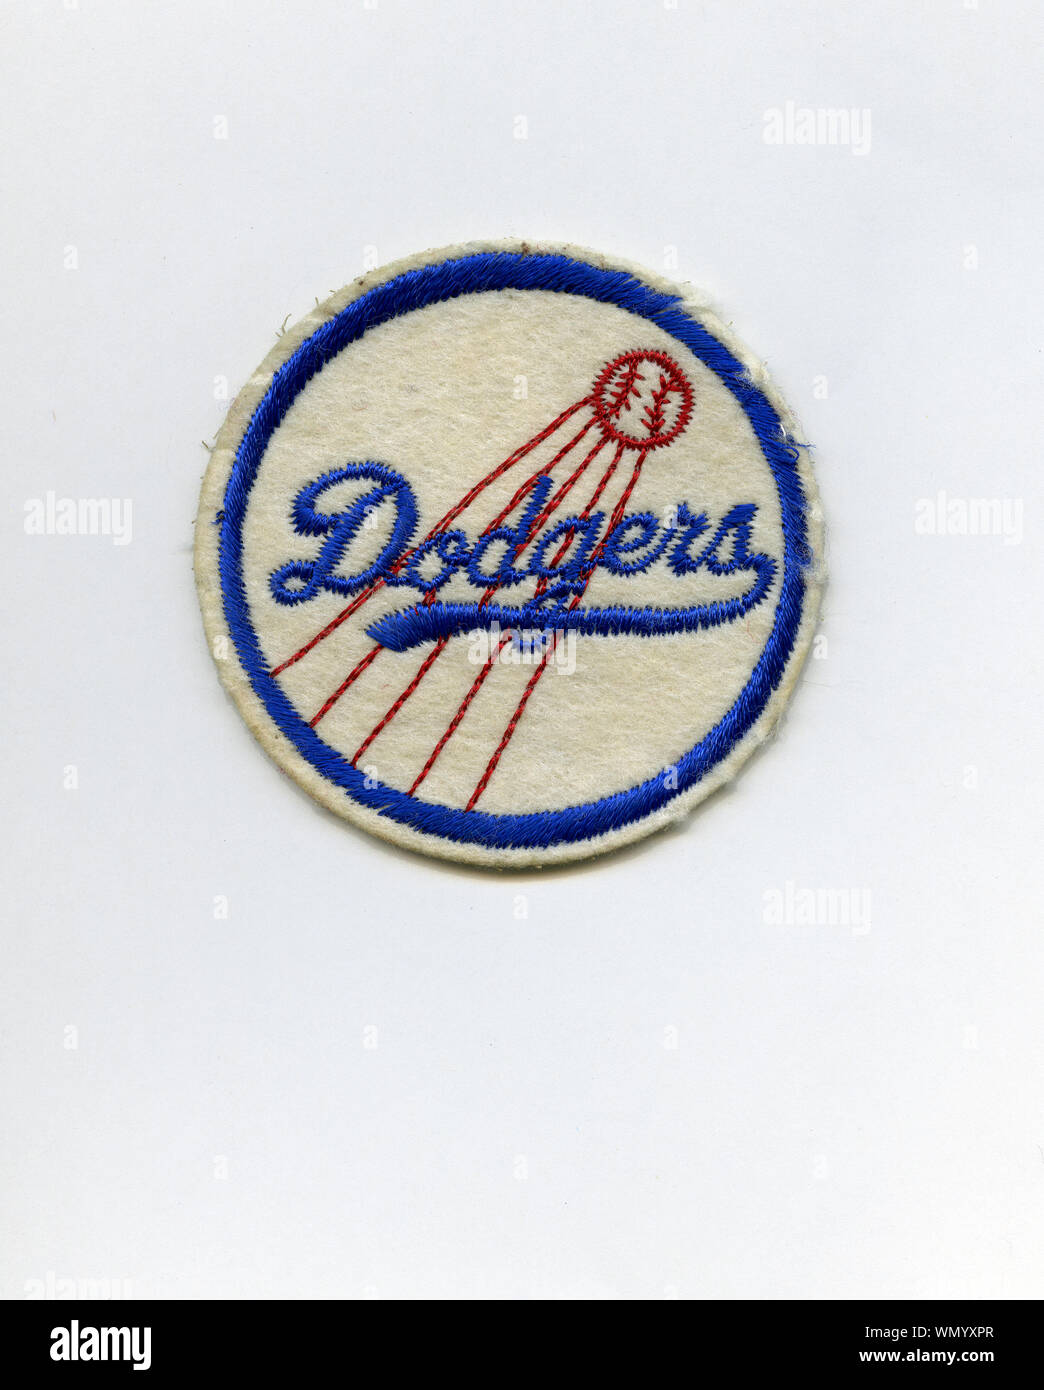 50 Best Logos in Major League Baseball History  Dodgers, Los angeles  dodgers, Baseball history